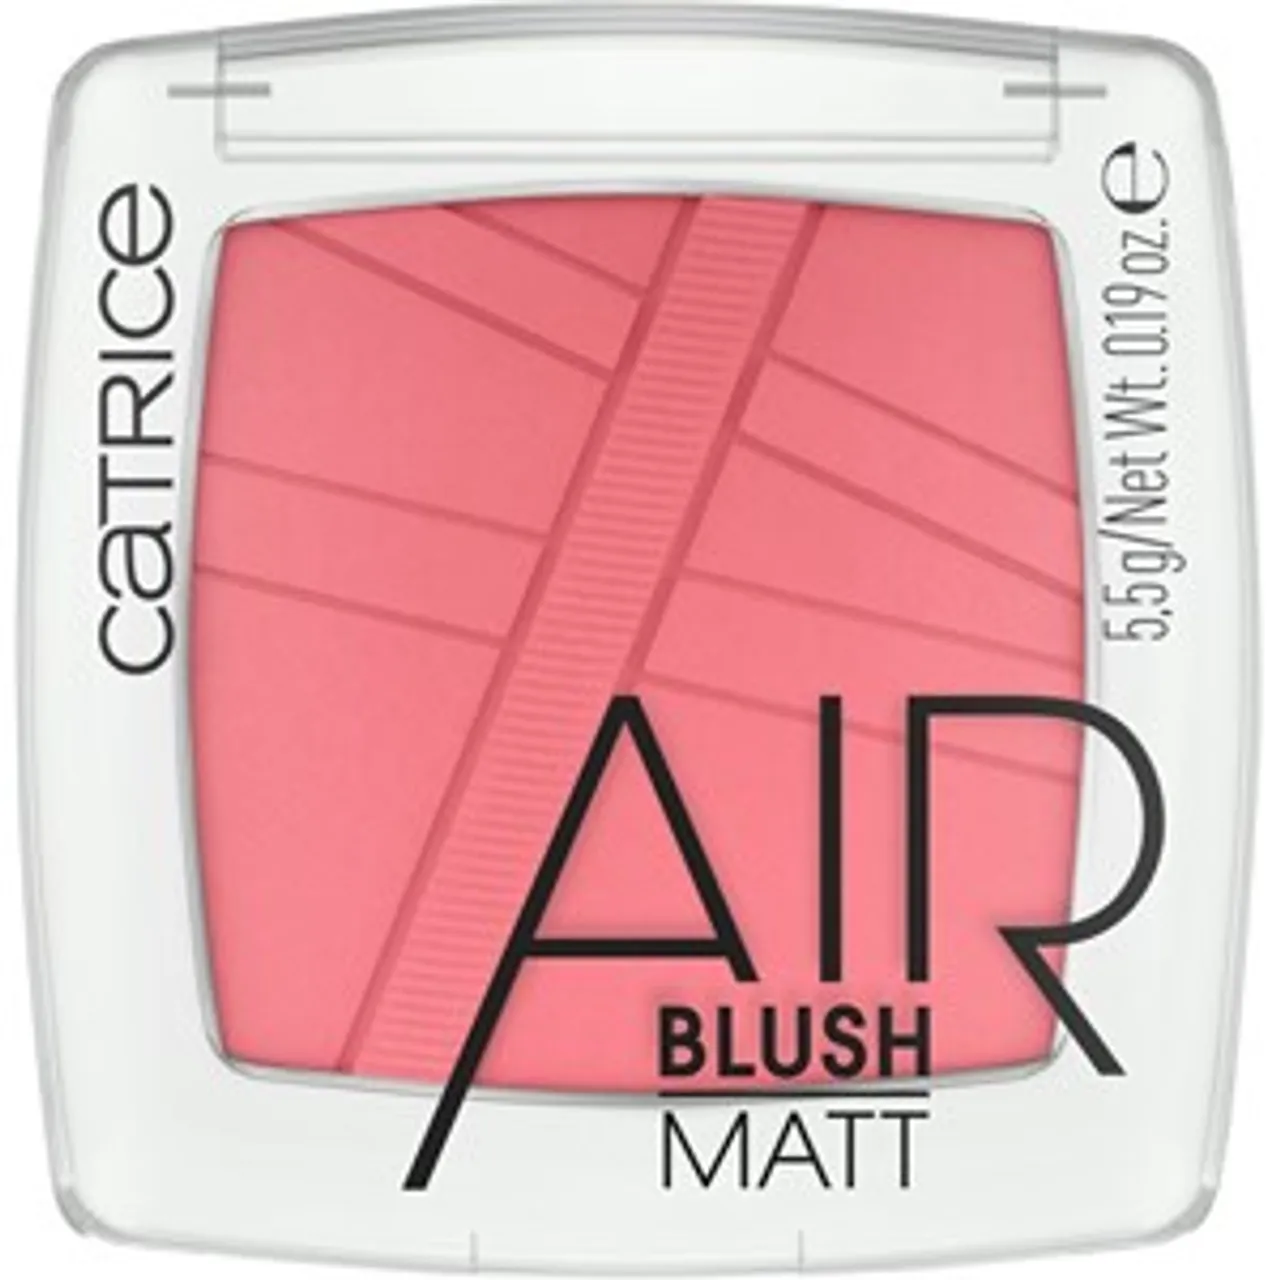 Catrice Air Blush Matt Female 5.50 g